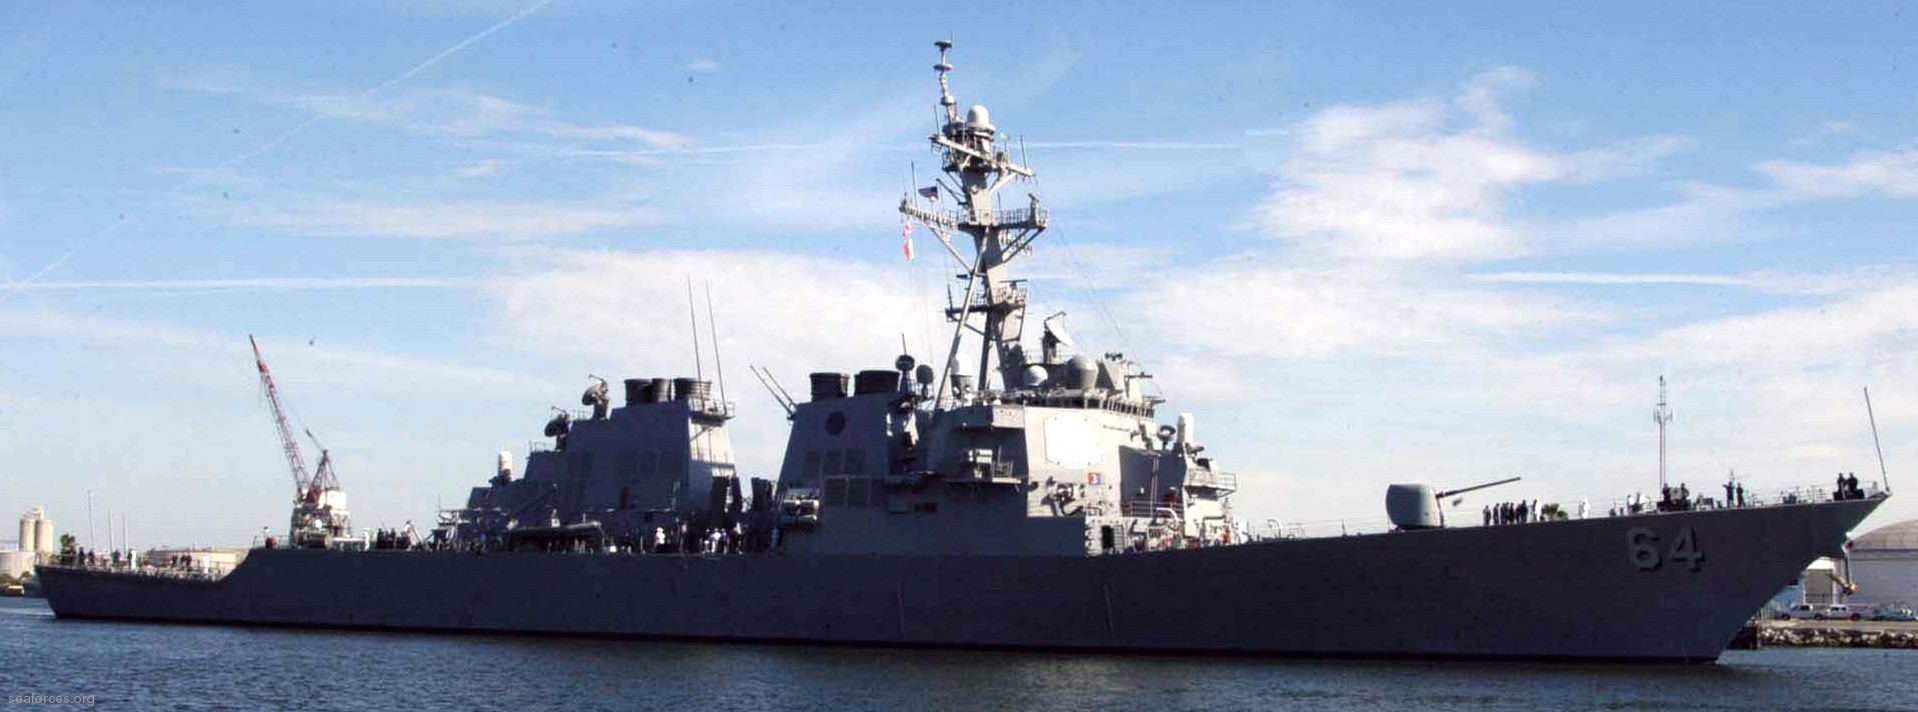 ddg-64 uss carney destroyer arleigh burke class navy tampa florida